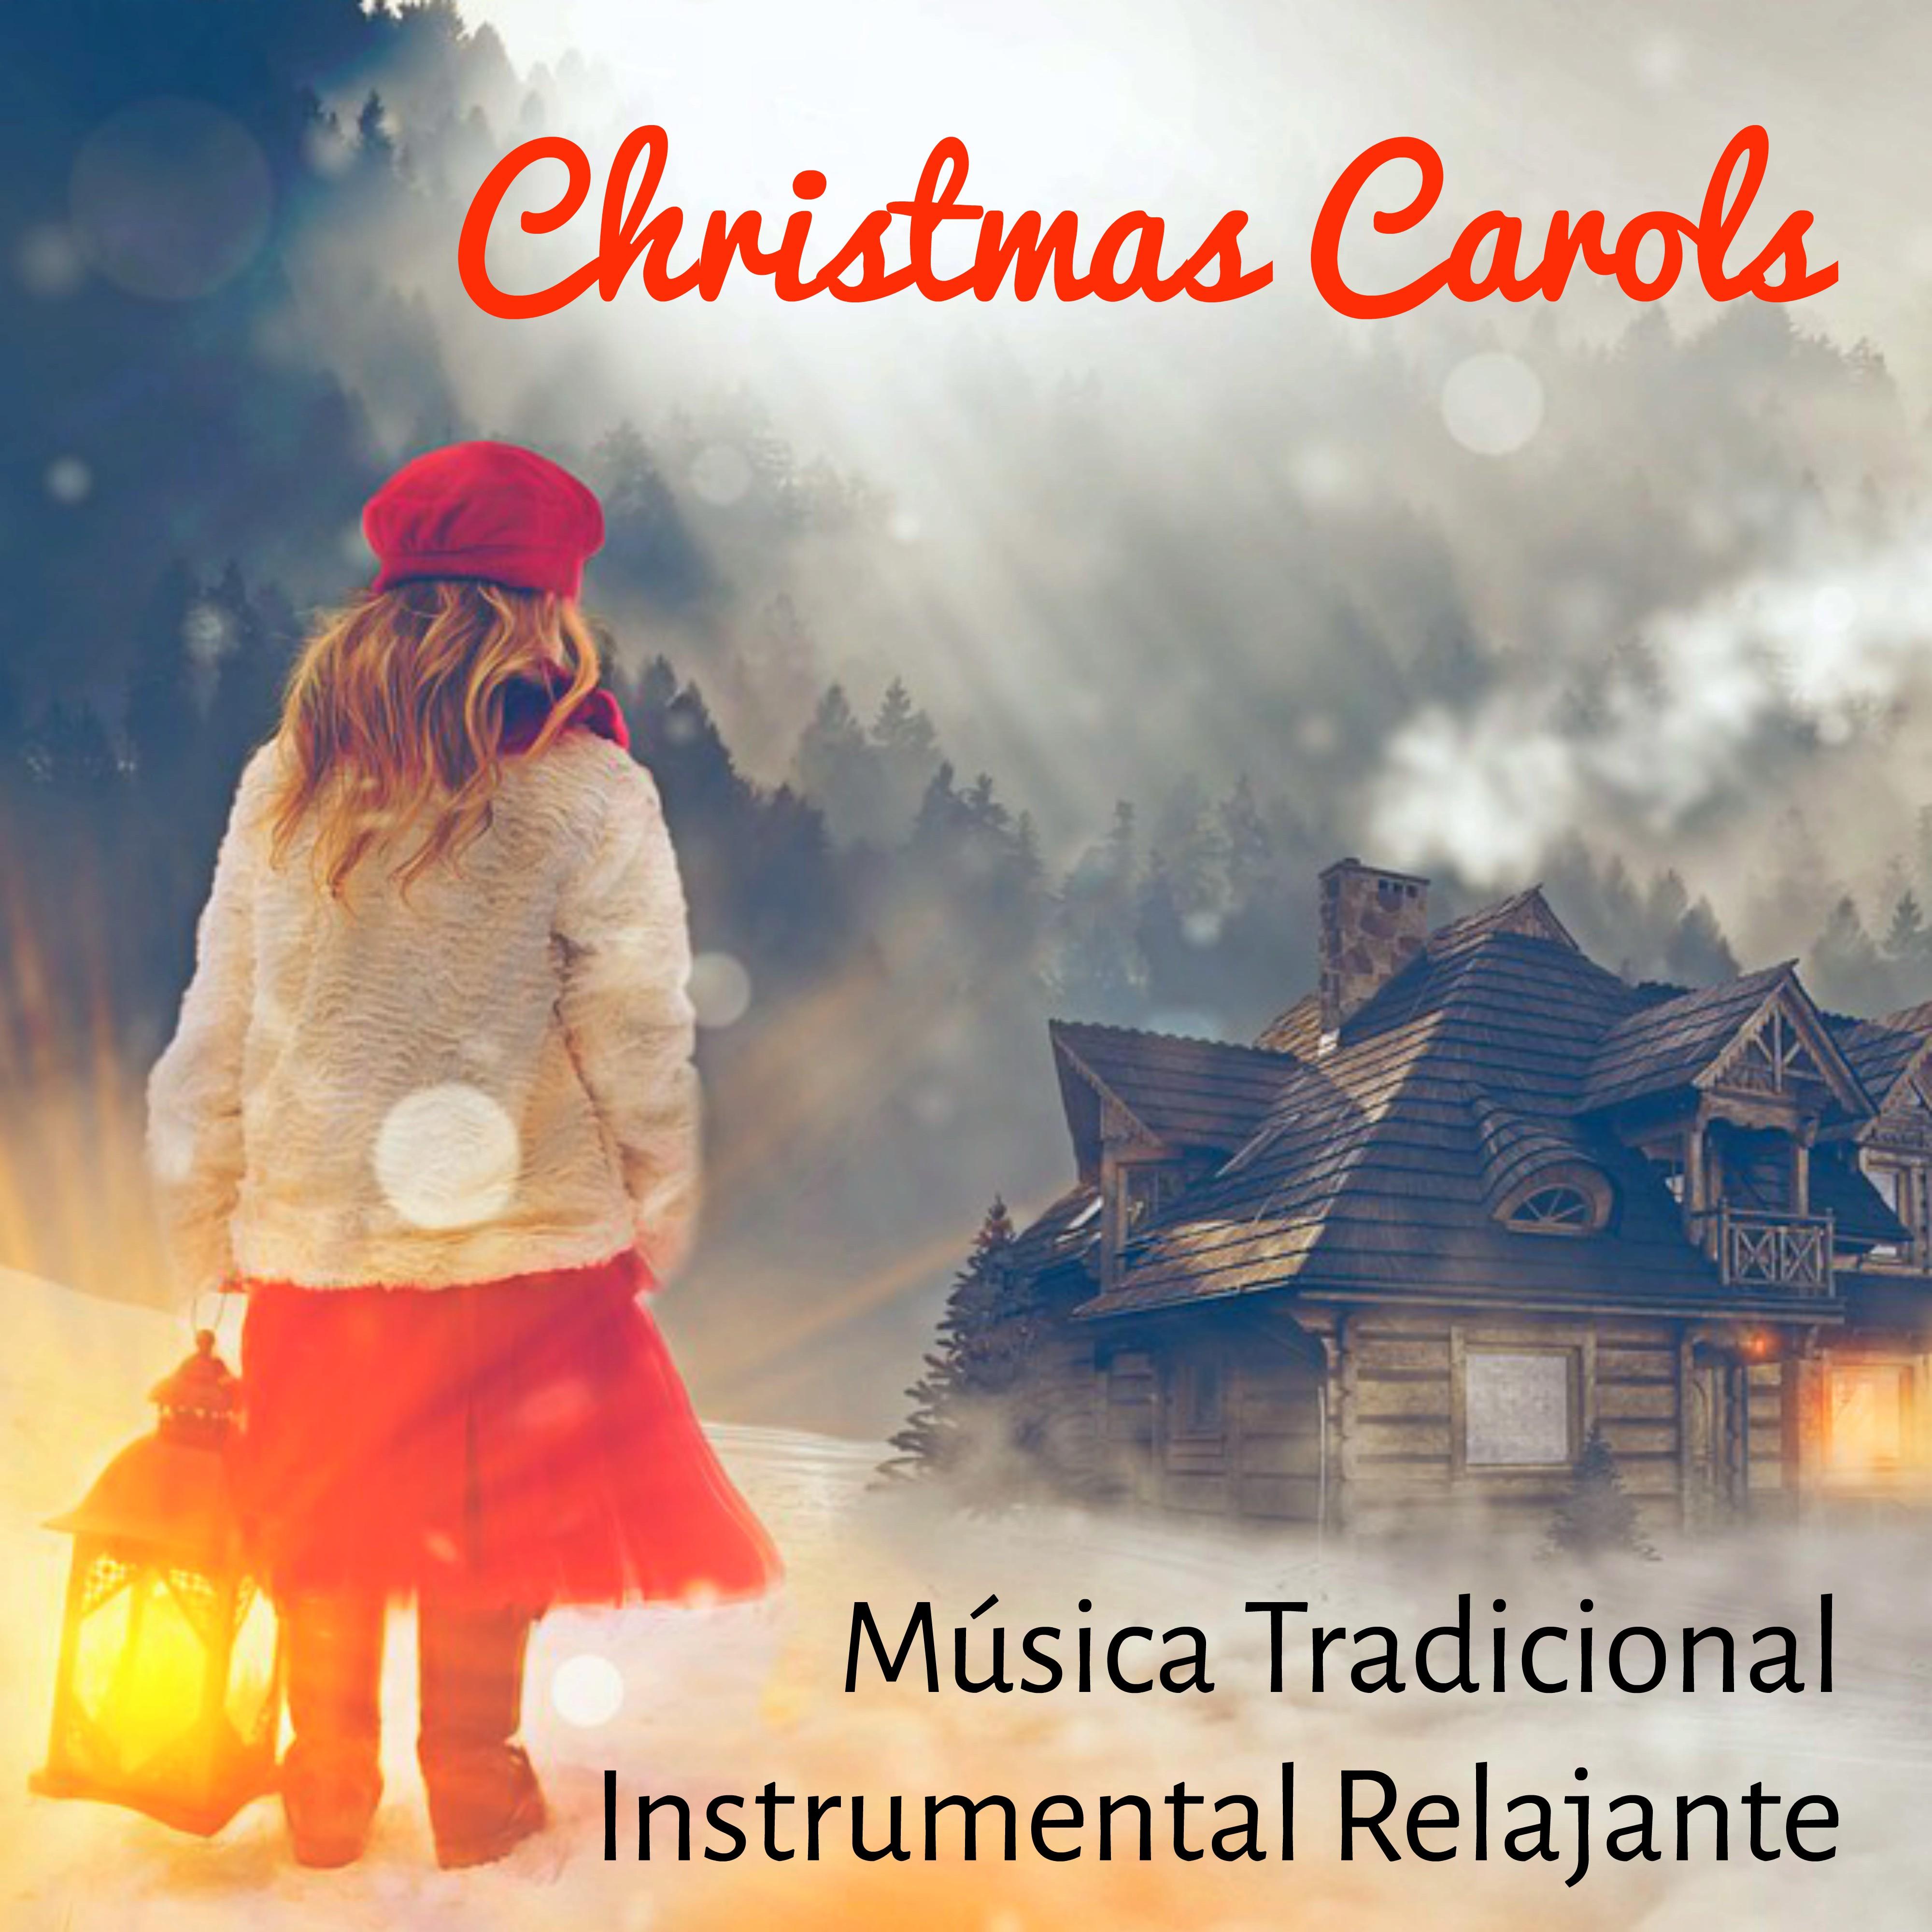 Christmas Carols  Mu sica Tradicional Instrumental Relajante para Lindo Di a Meditacio n Vipassana Noche Silenciosa con Sonidos New Age Naturales Bianurales